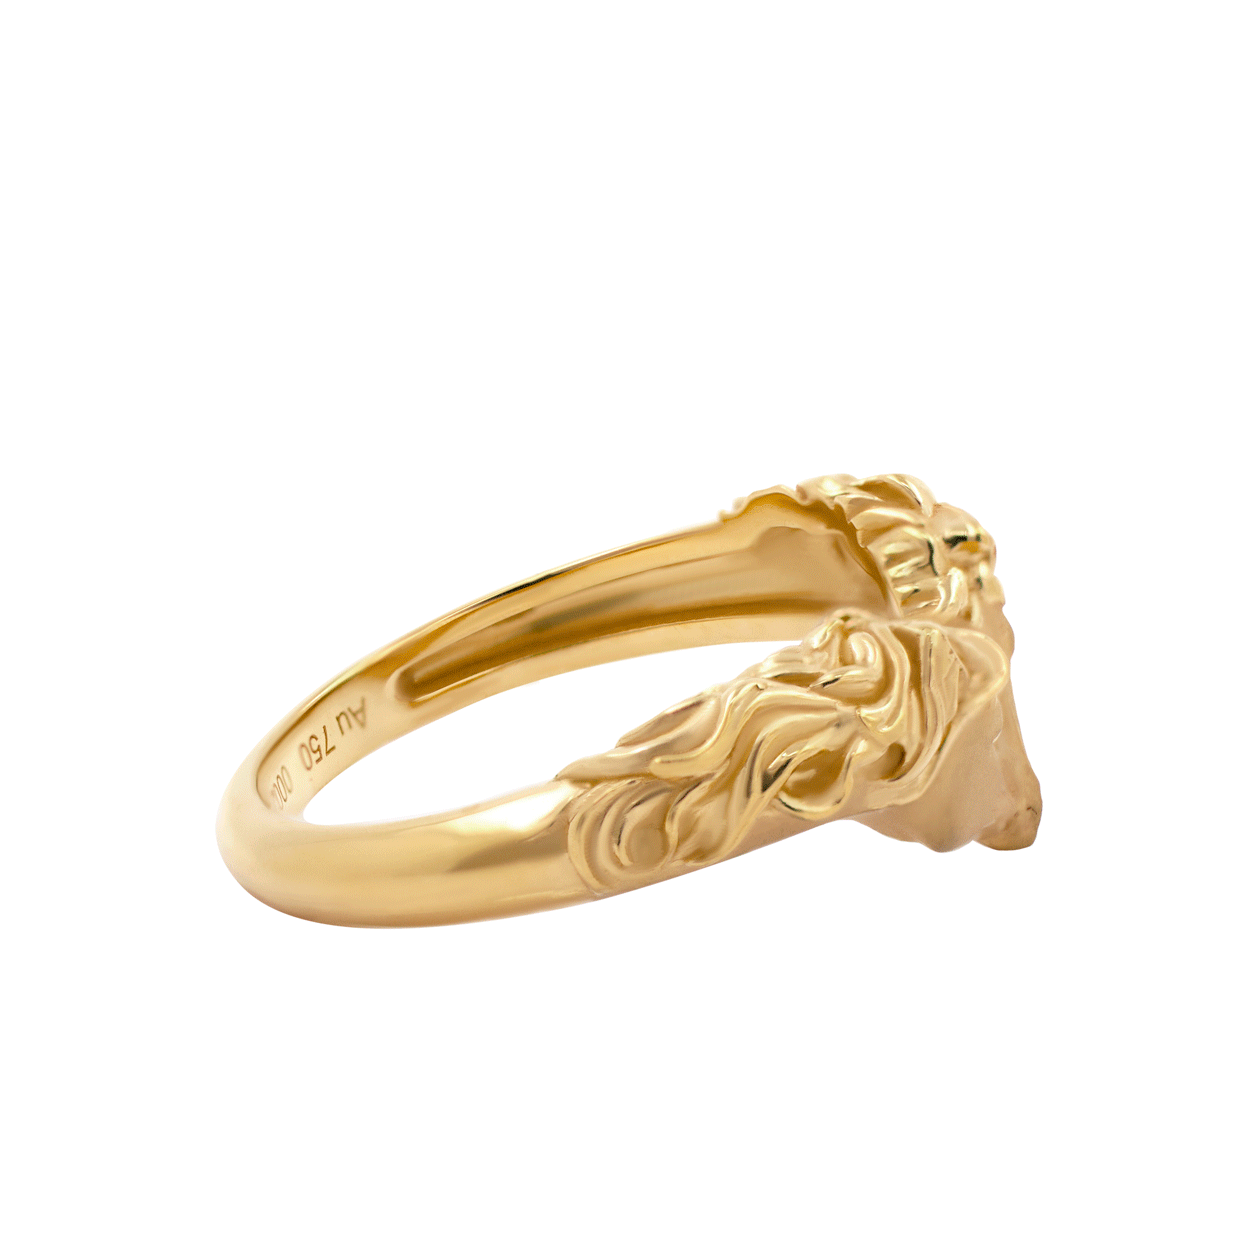 Gold Ring “HORSE” - Manuel Carrera Cordon